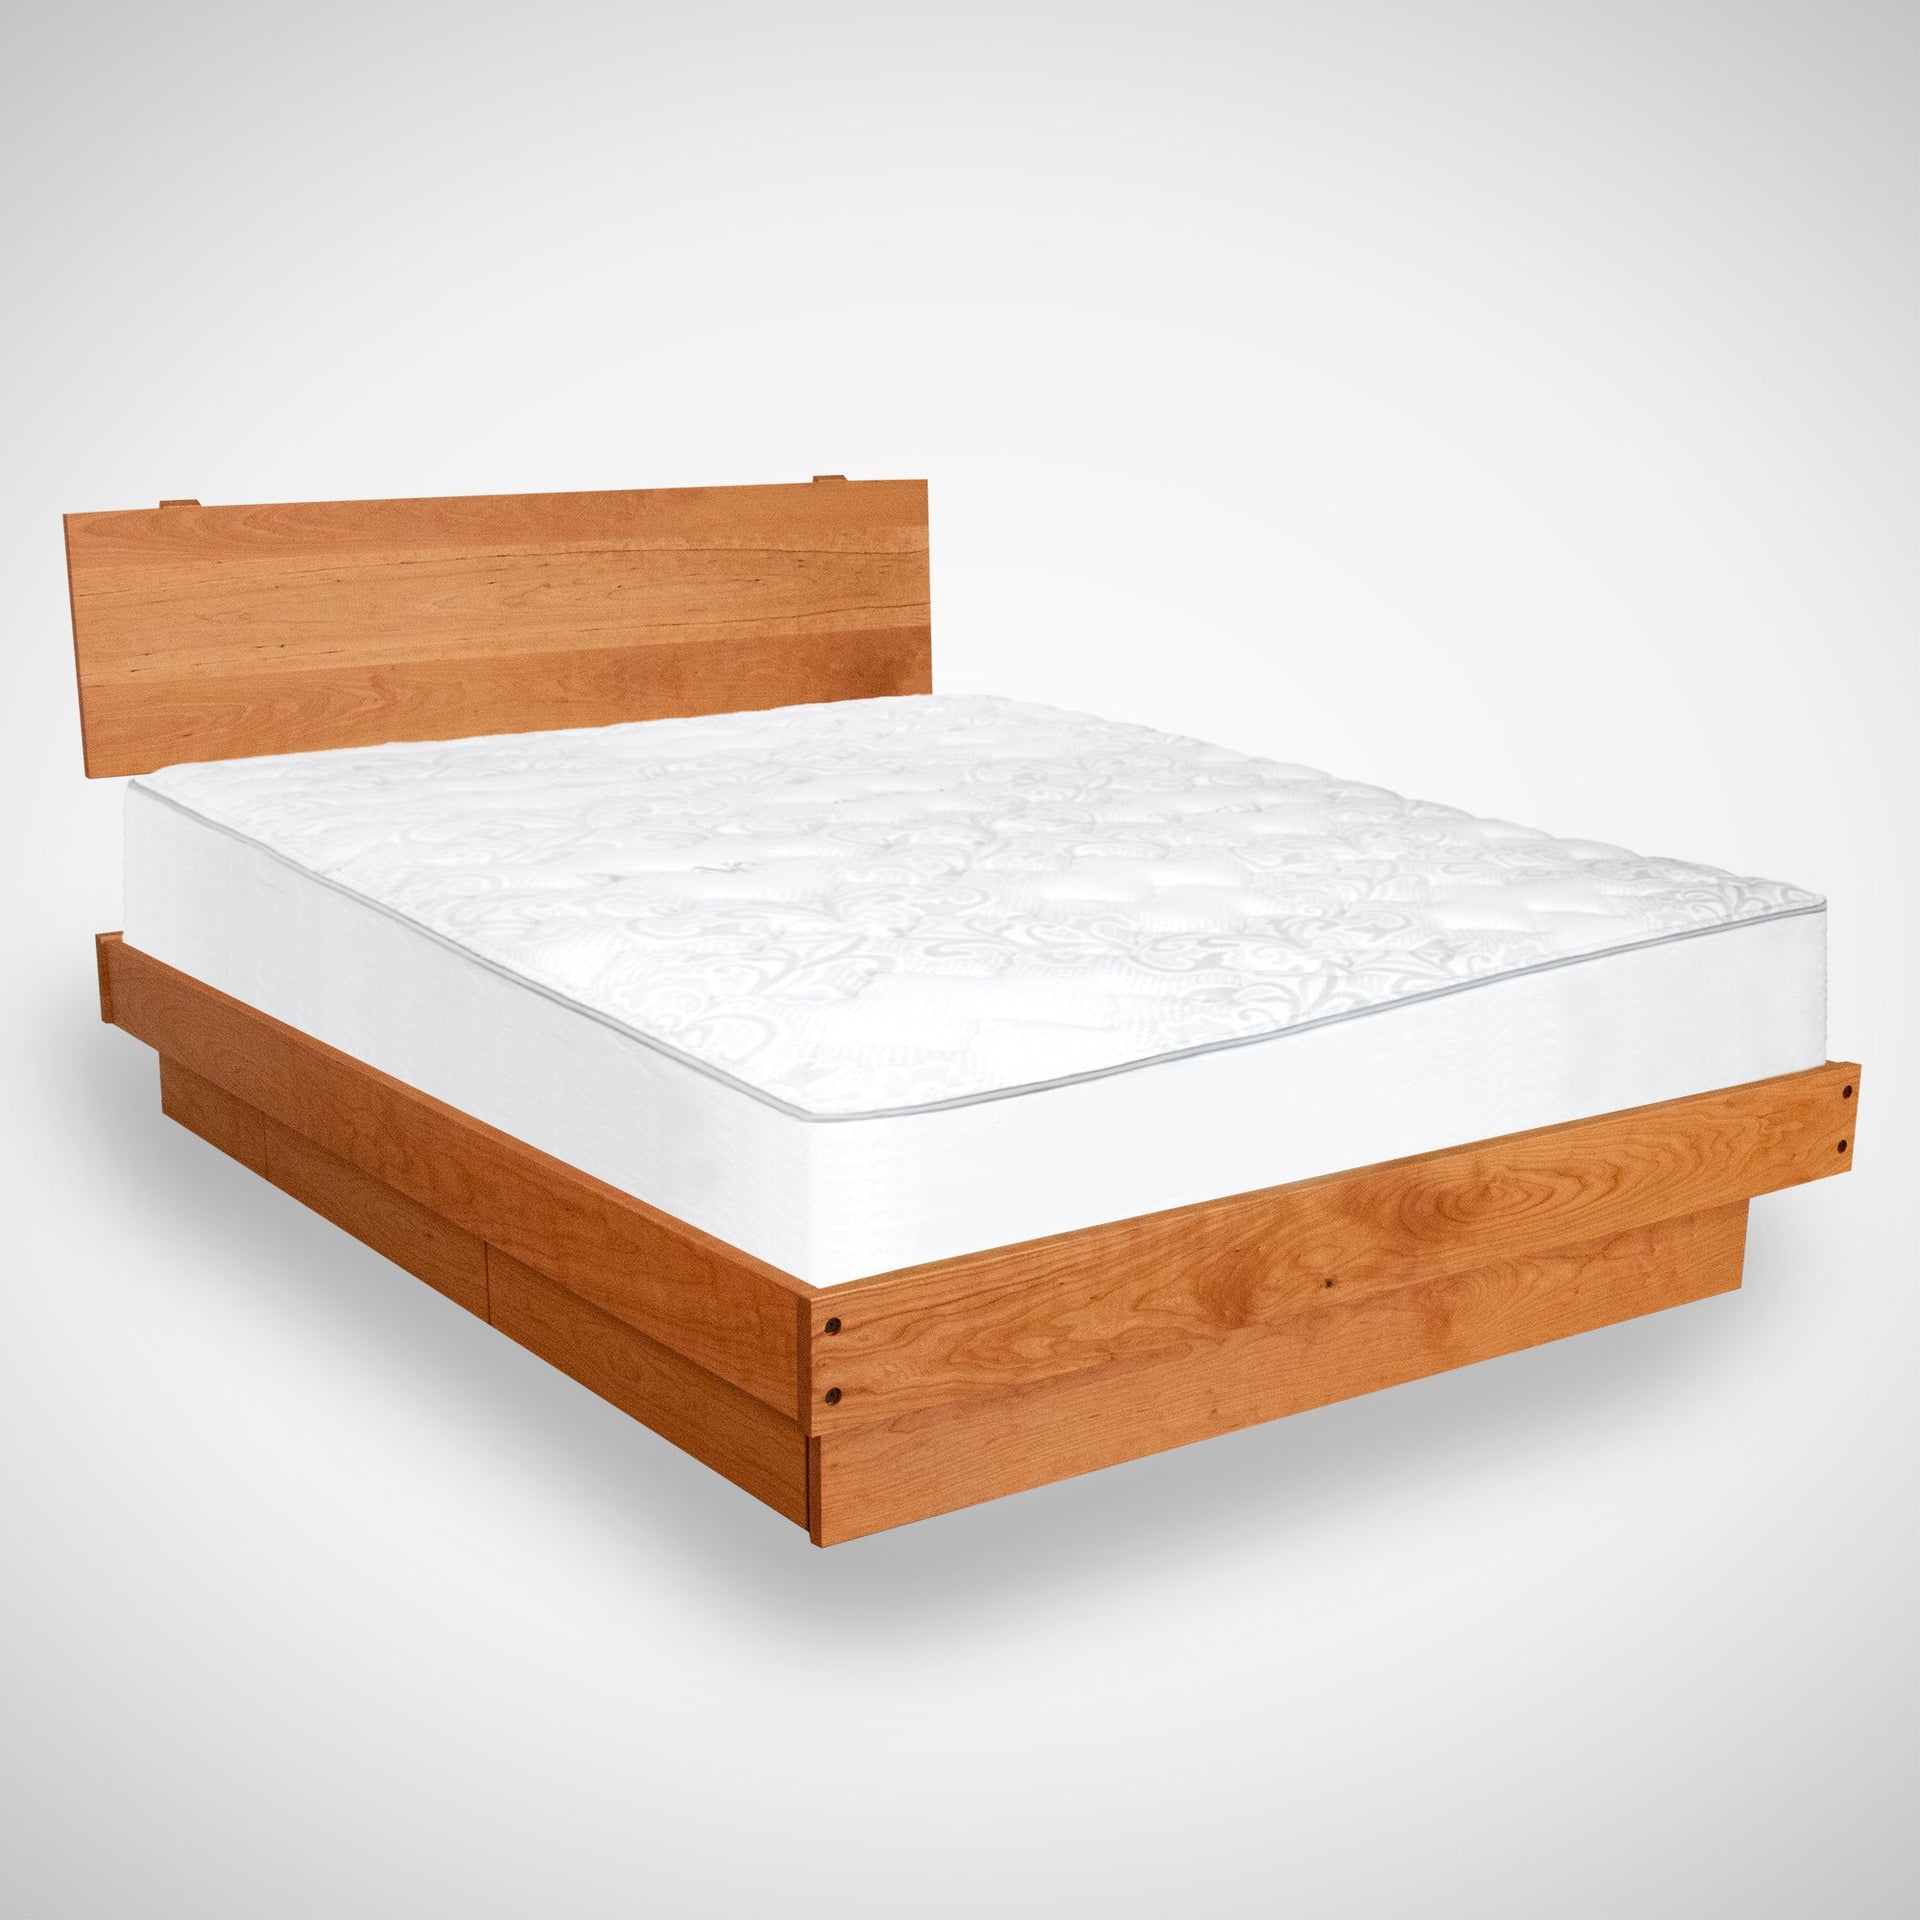 Solid wood platform bed with storage